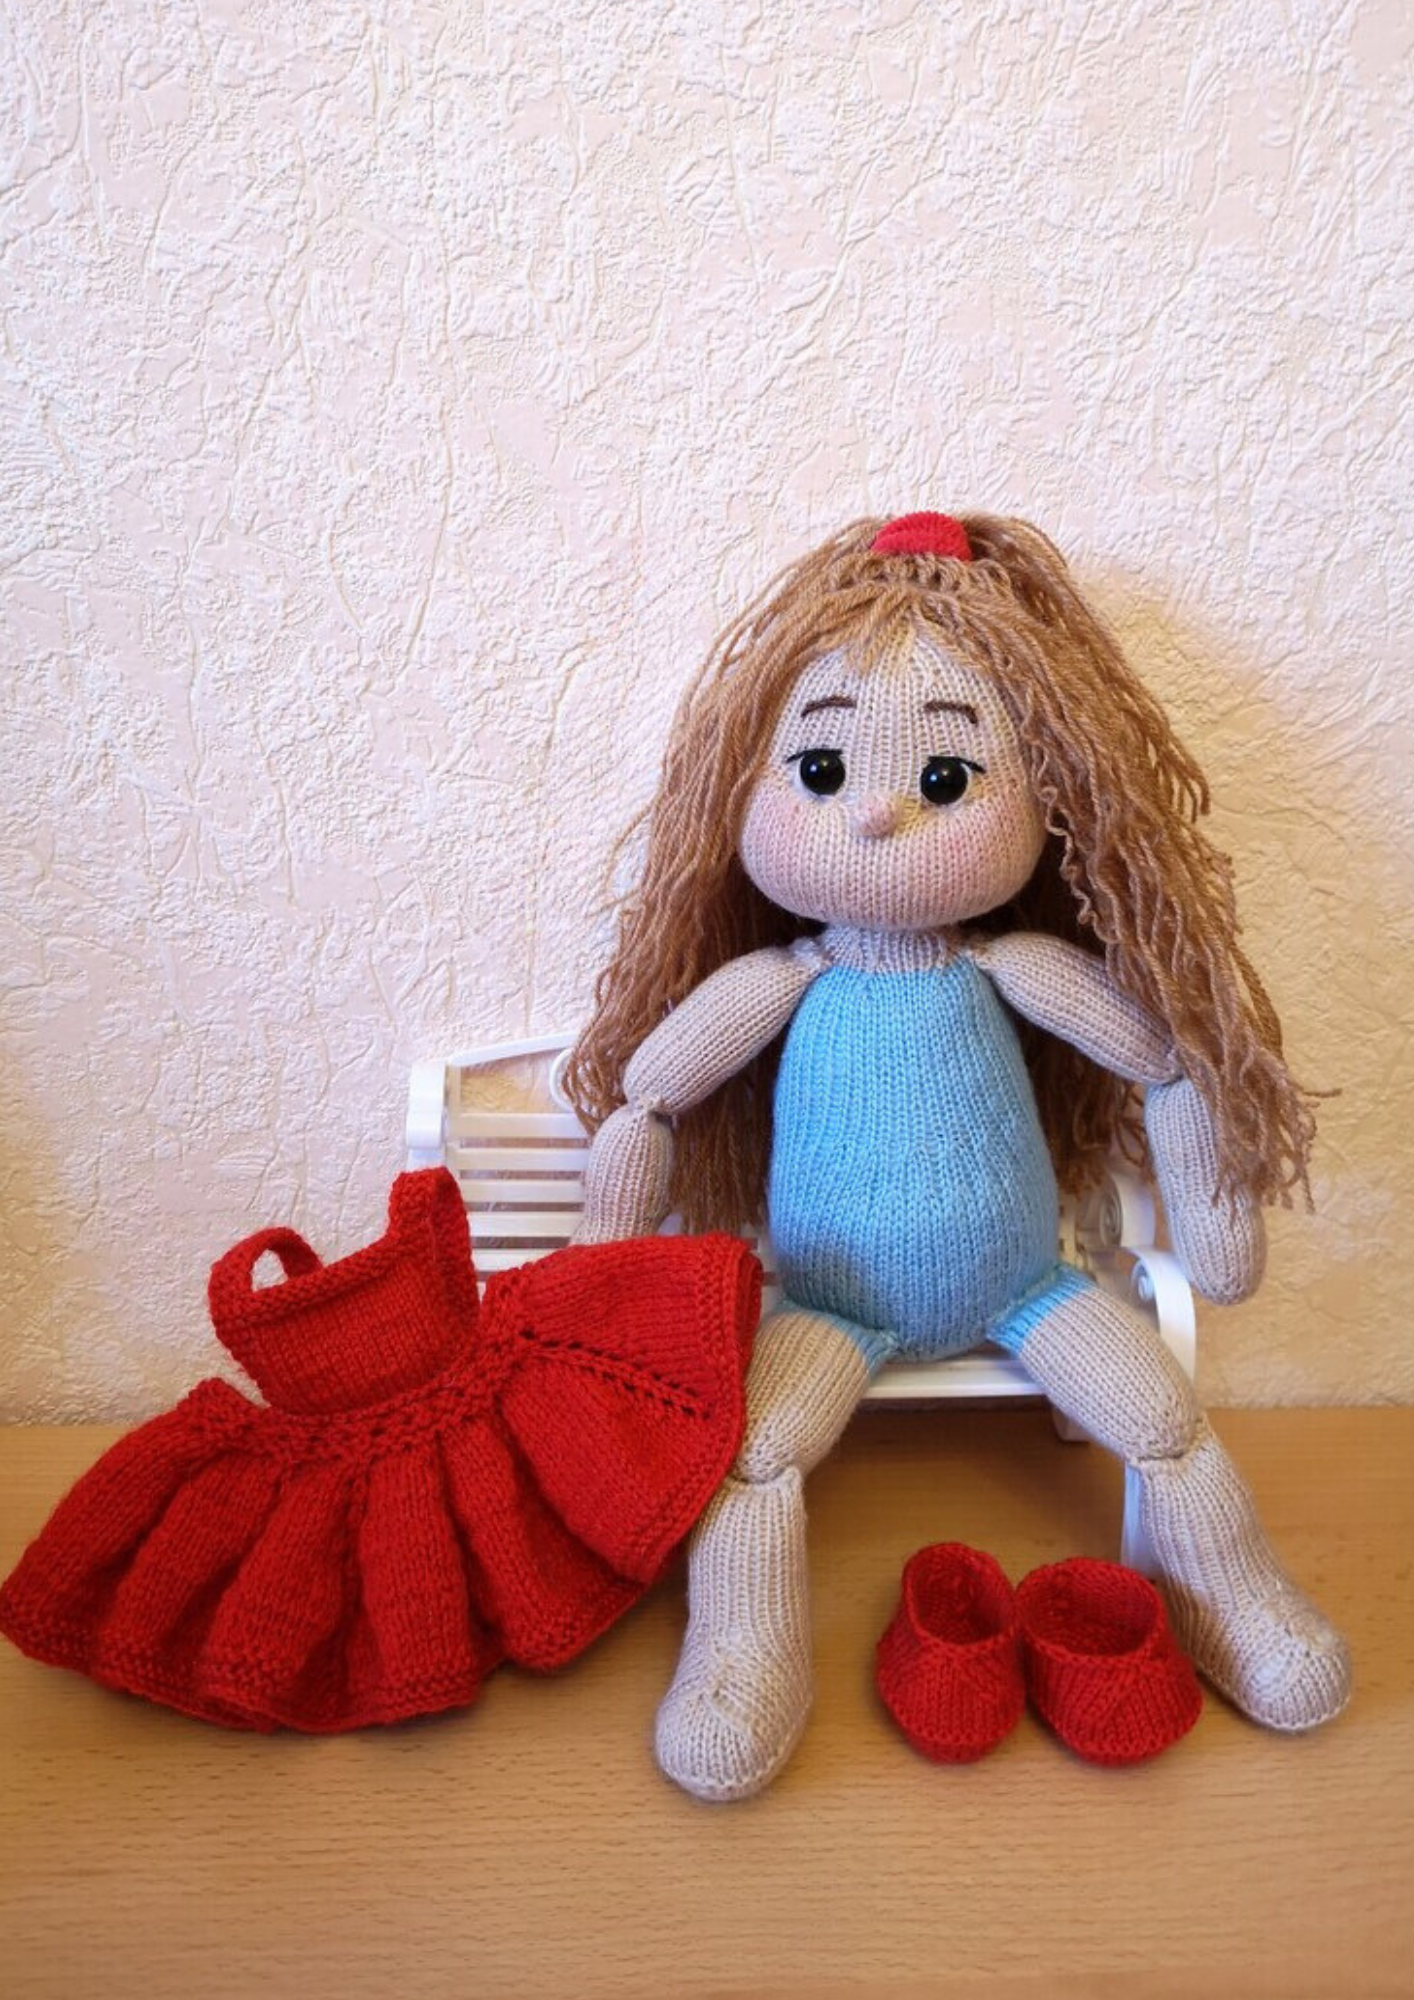 Mary knitting Doll pattern.